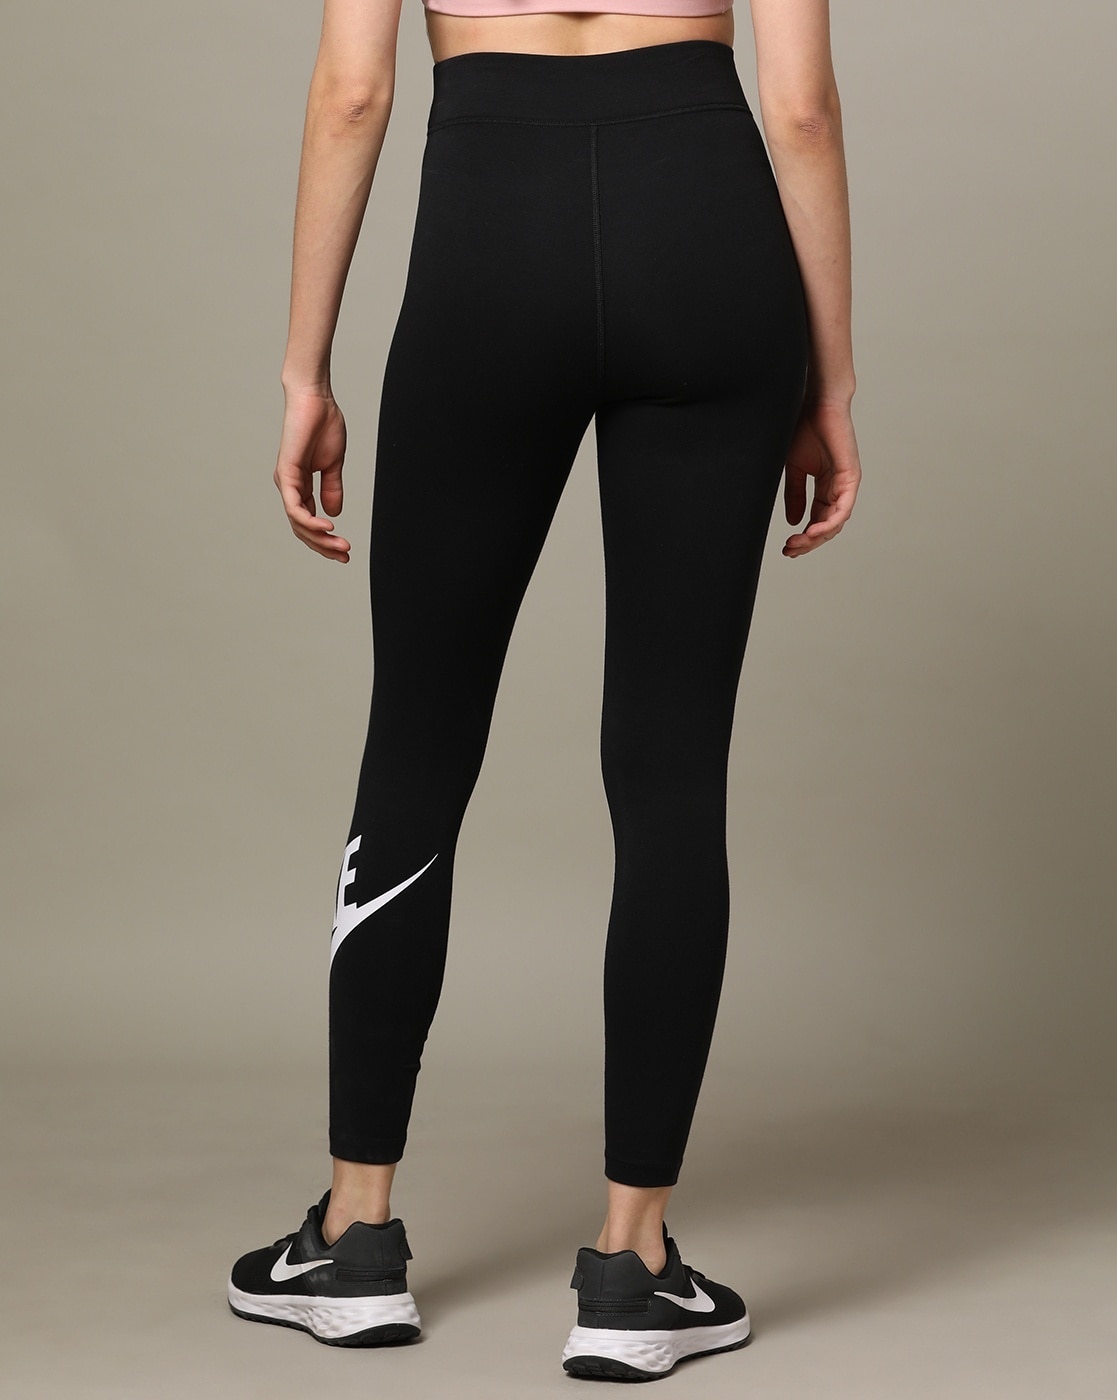 Buy Nike Womens Dri-FIT Team One Tight Legging at Ubuy India